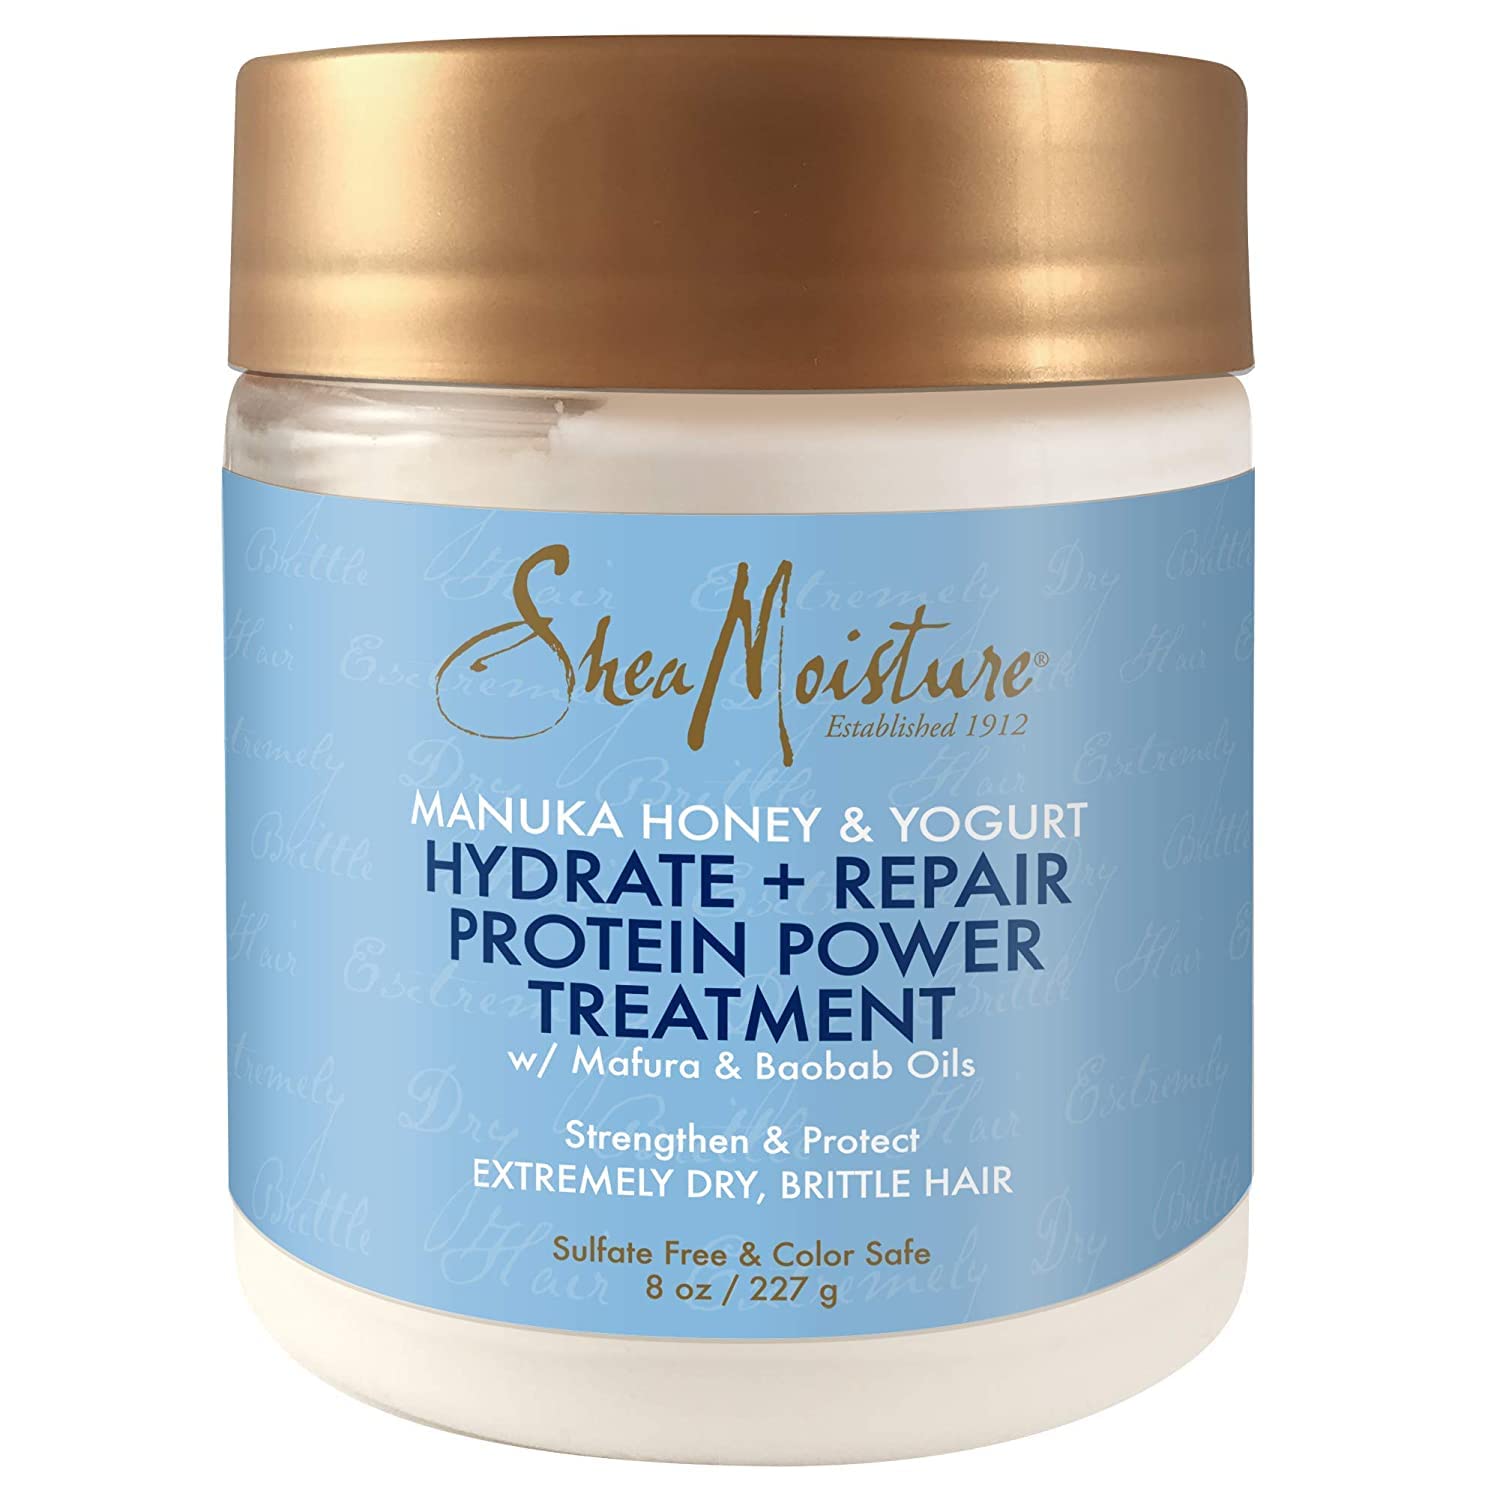 Shea Moisture Manuka Honey & Yogurt Hydrate + Repair Protein-Strong Treatment, 8 Oz